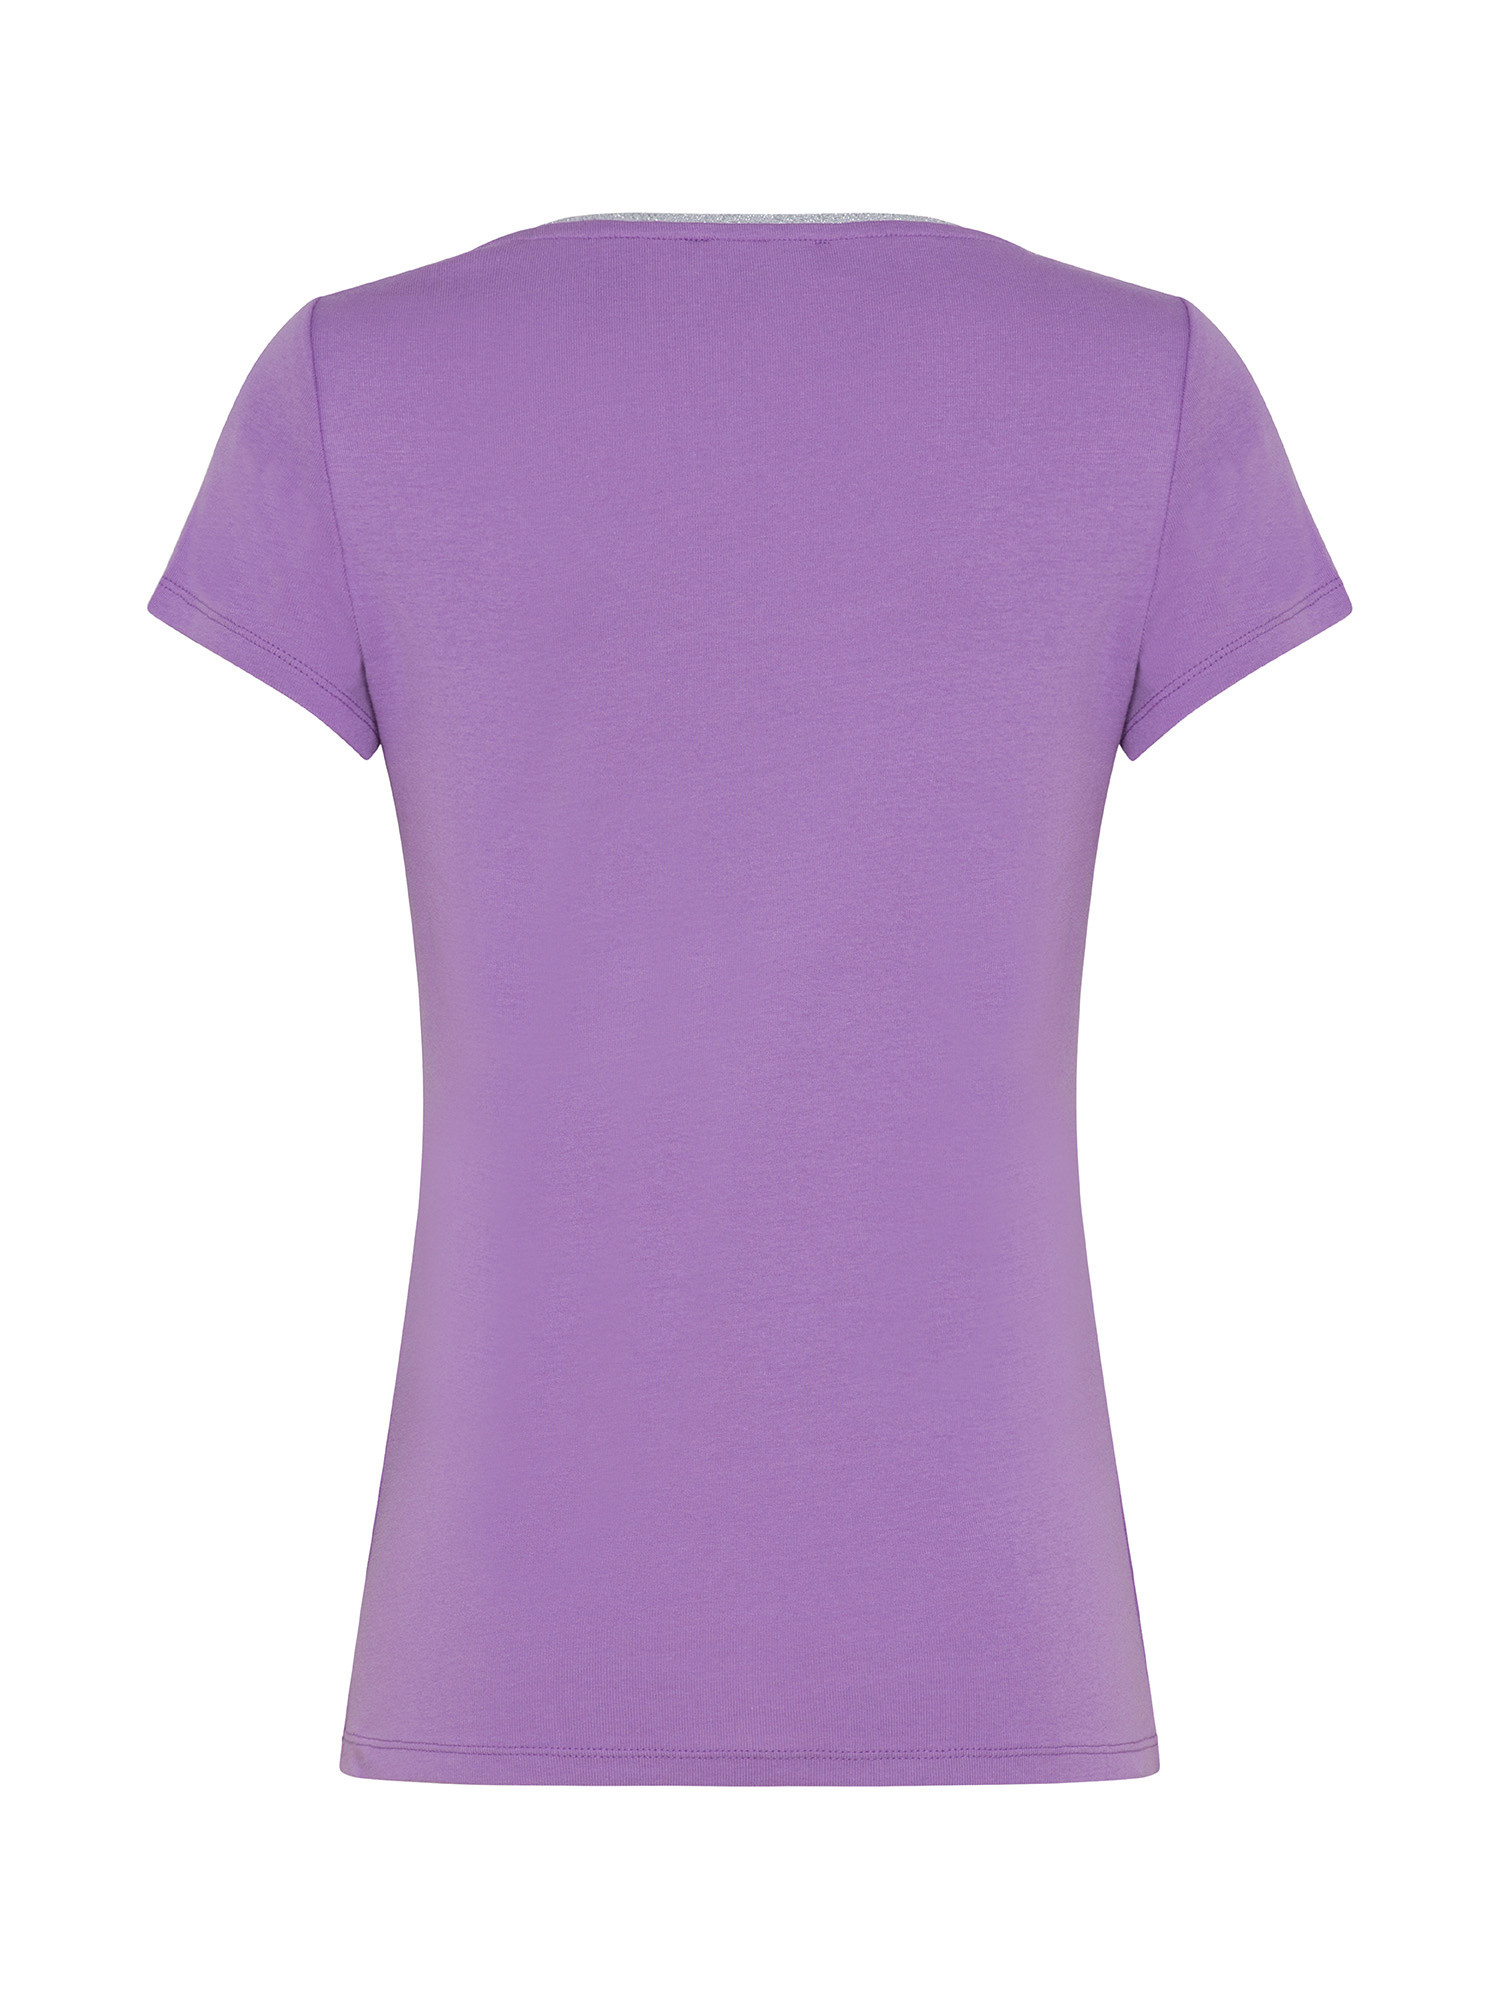 Koan - T-shirt in cotone con lurex, Viola lilla, large image number 1